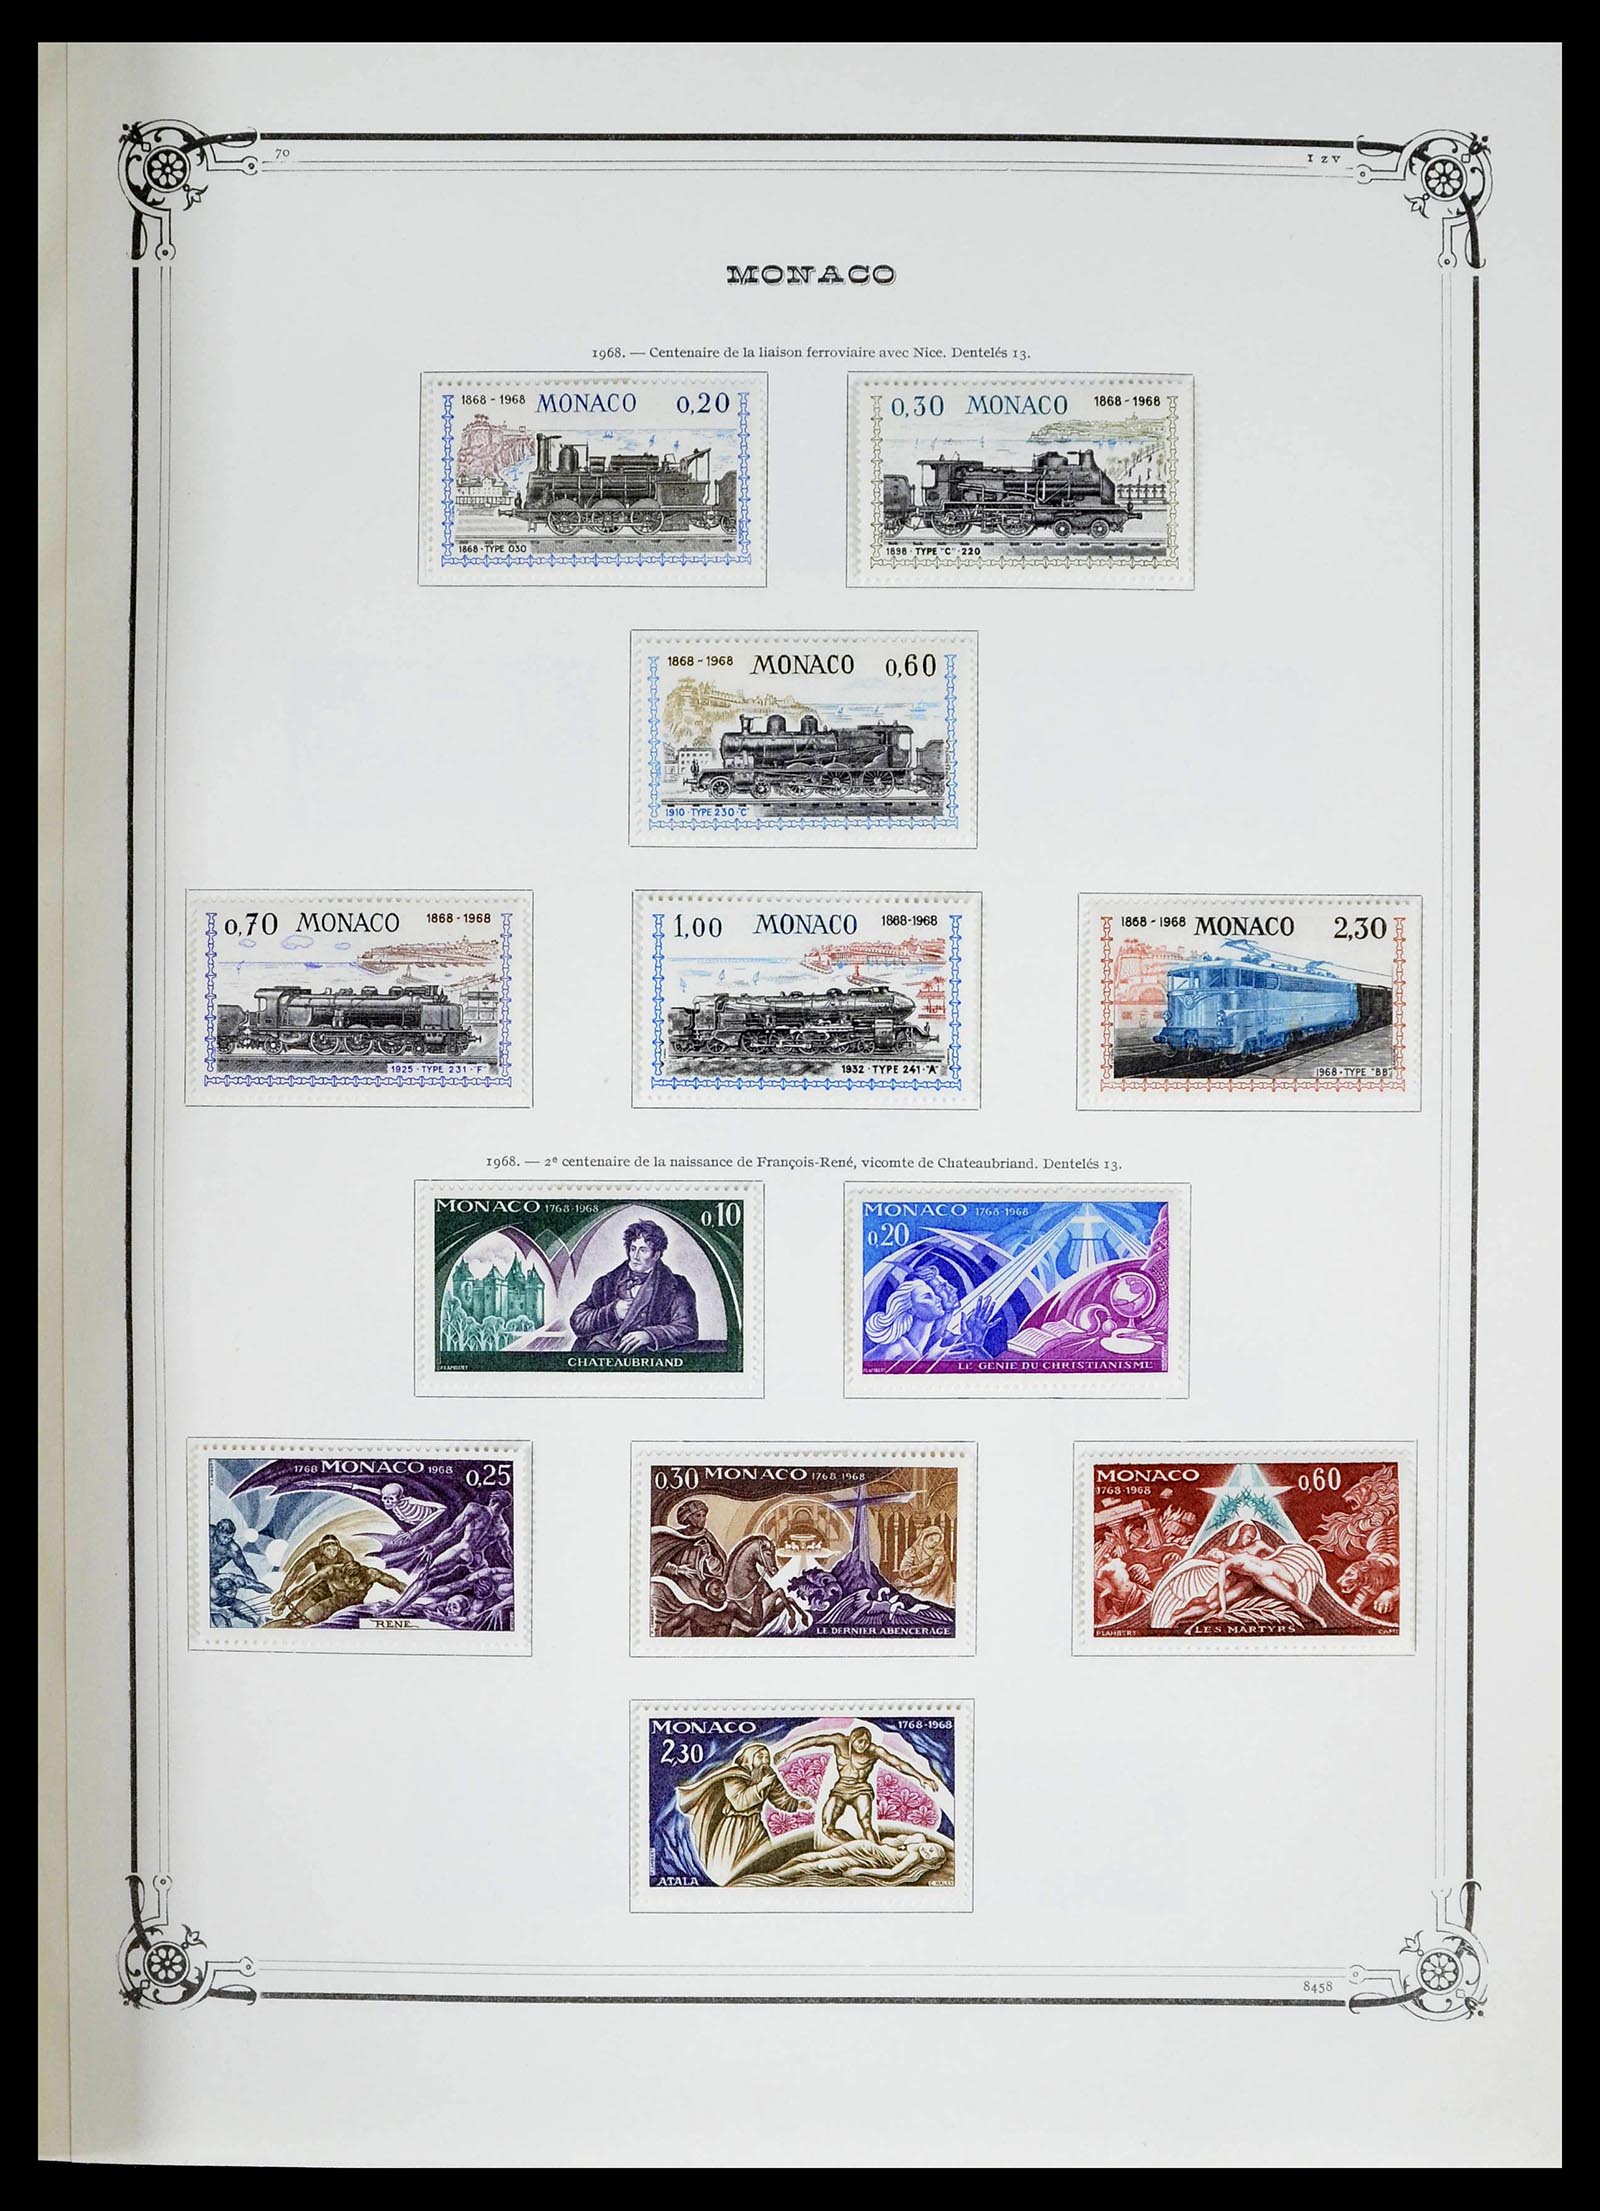 39133 0050 - Stamp collection 39133 Monaco 1885-1996.